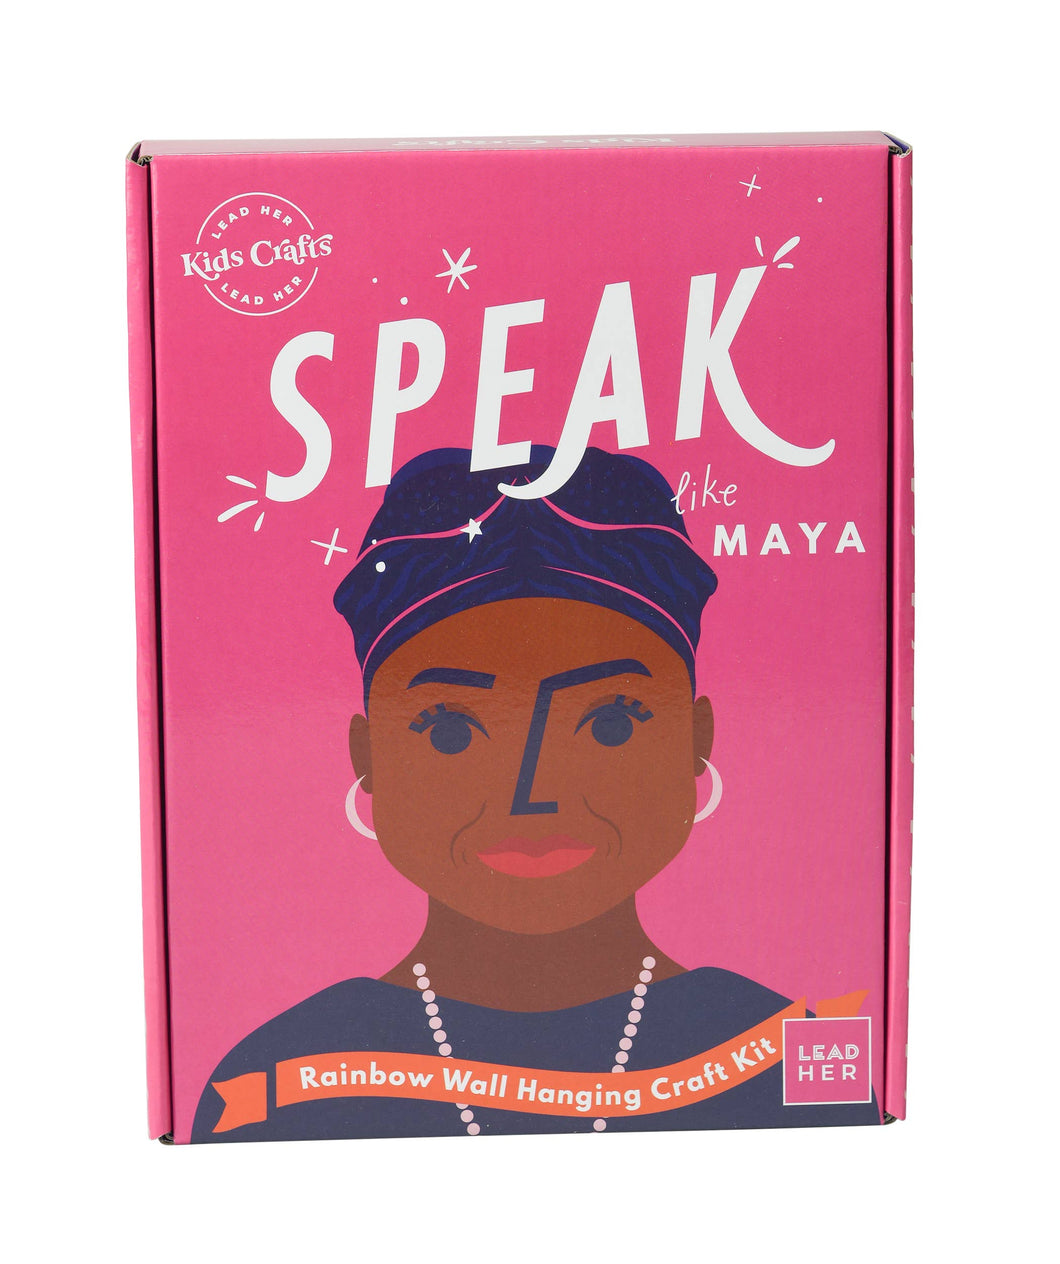 Front photo of the “SPEAK like Maya” rainbow wall hanging craft kit box packaging.